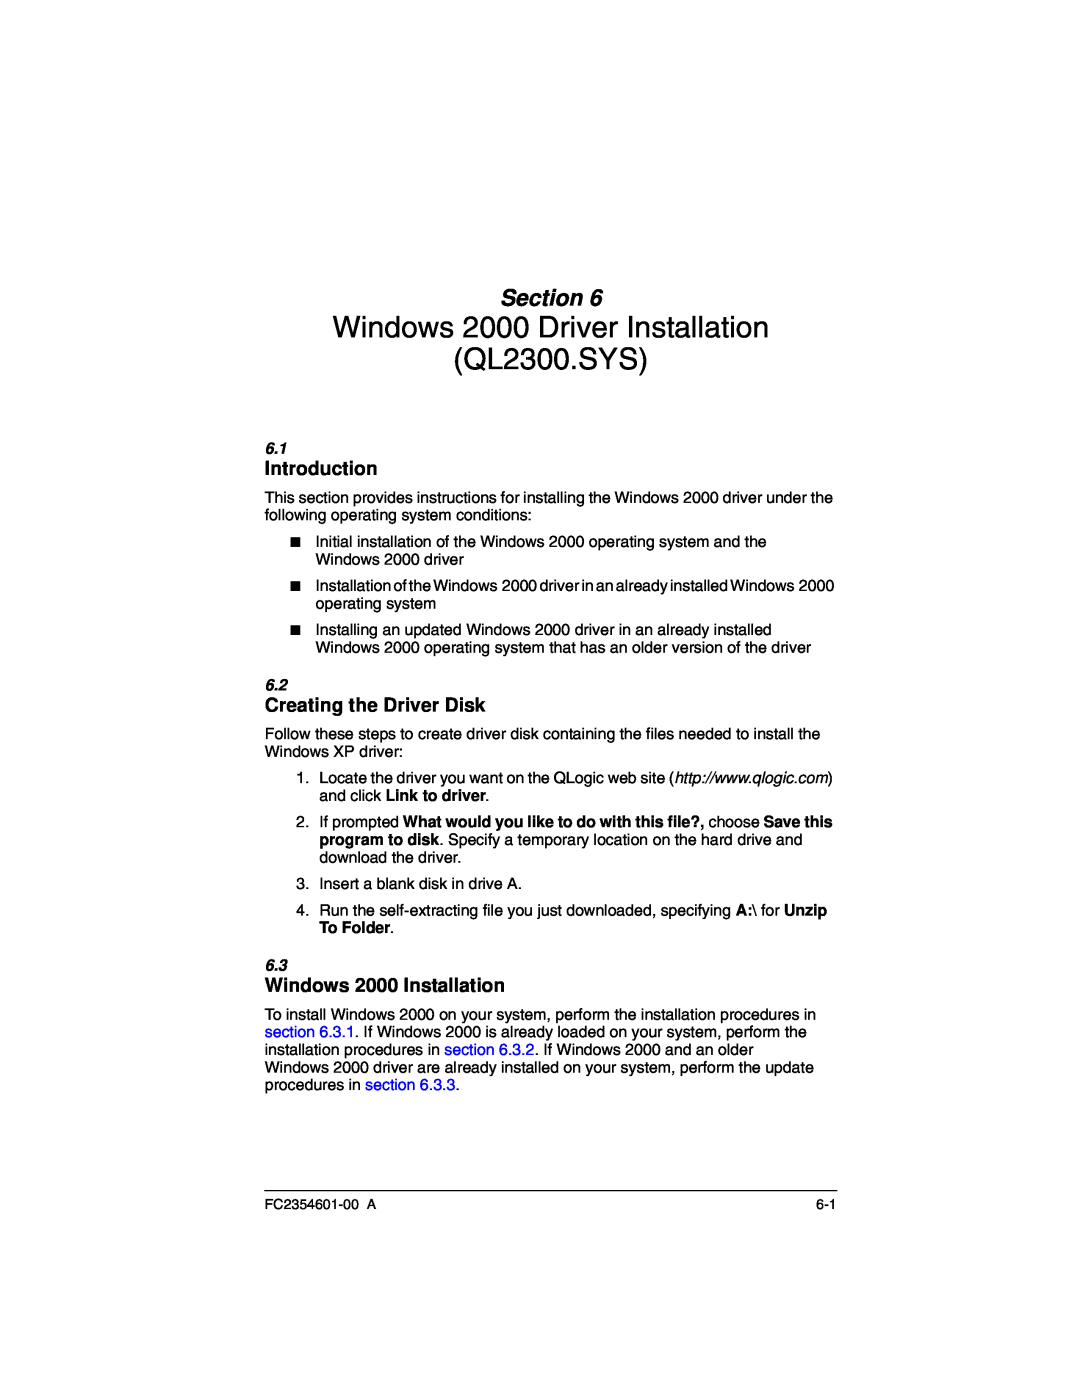 Q-Logic manual Windows 2000 Driver Installation QL2300.SYS, Creating the Driver Disk, Windows 2000 Installation, Section 